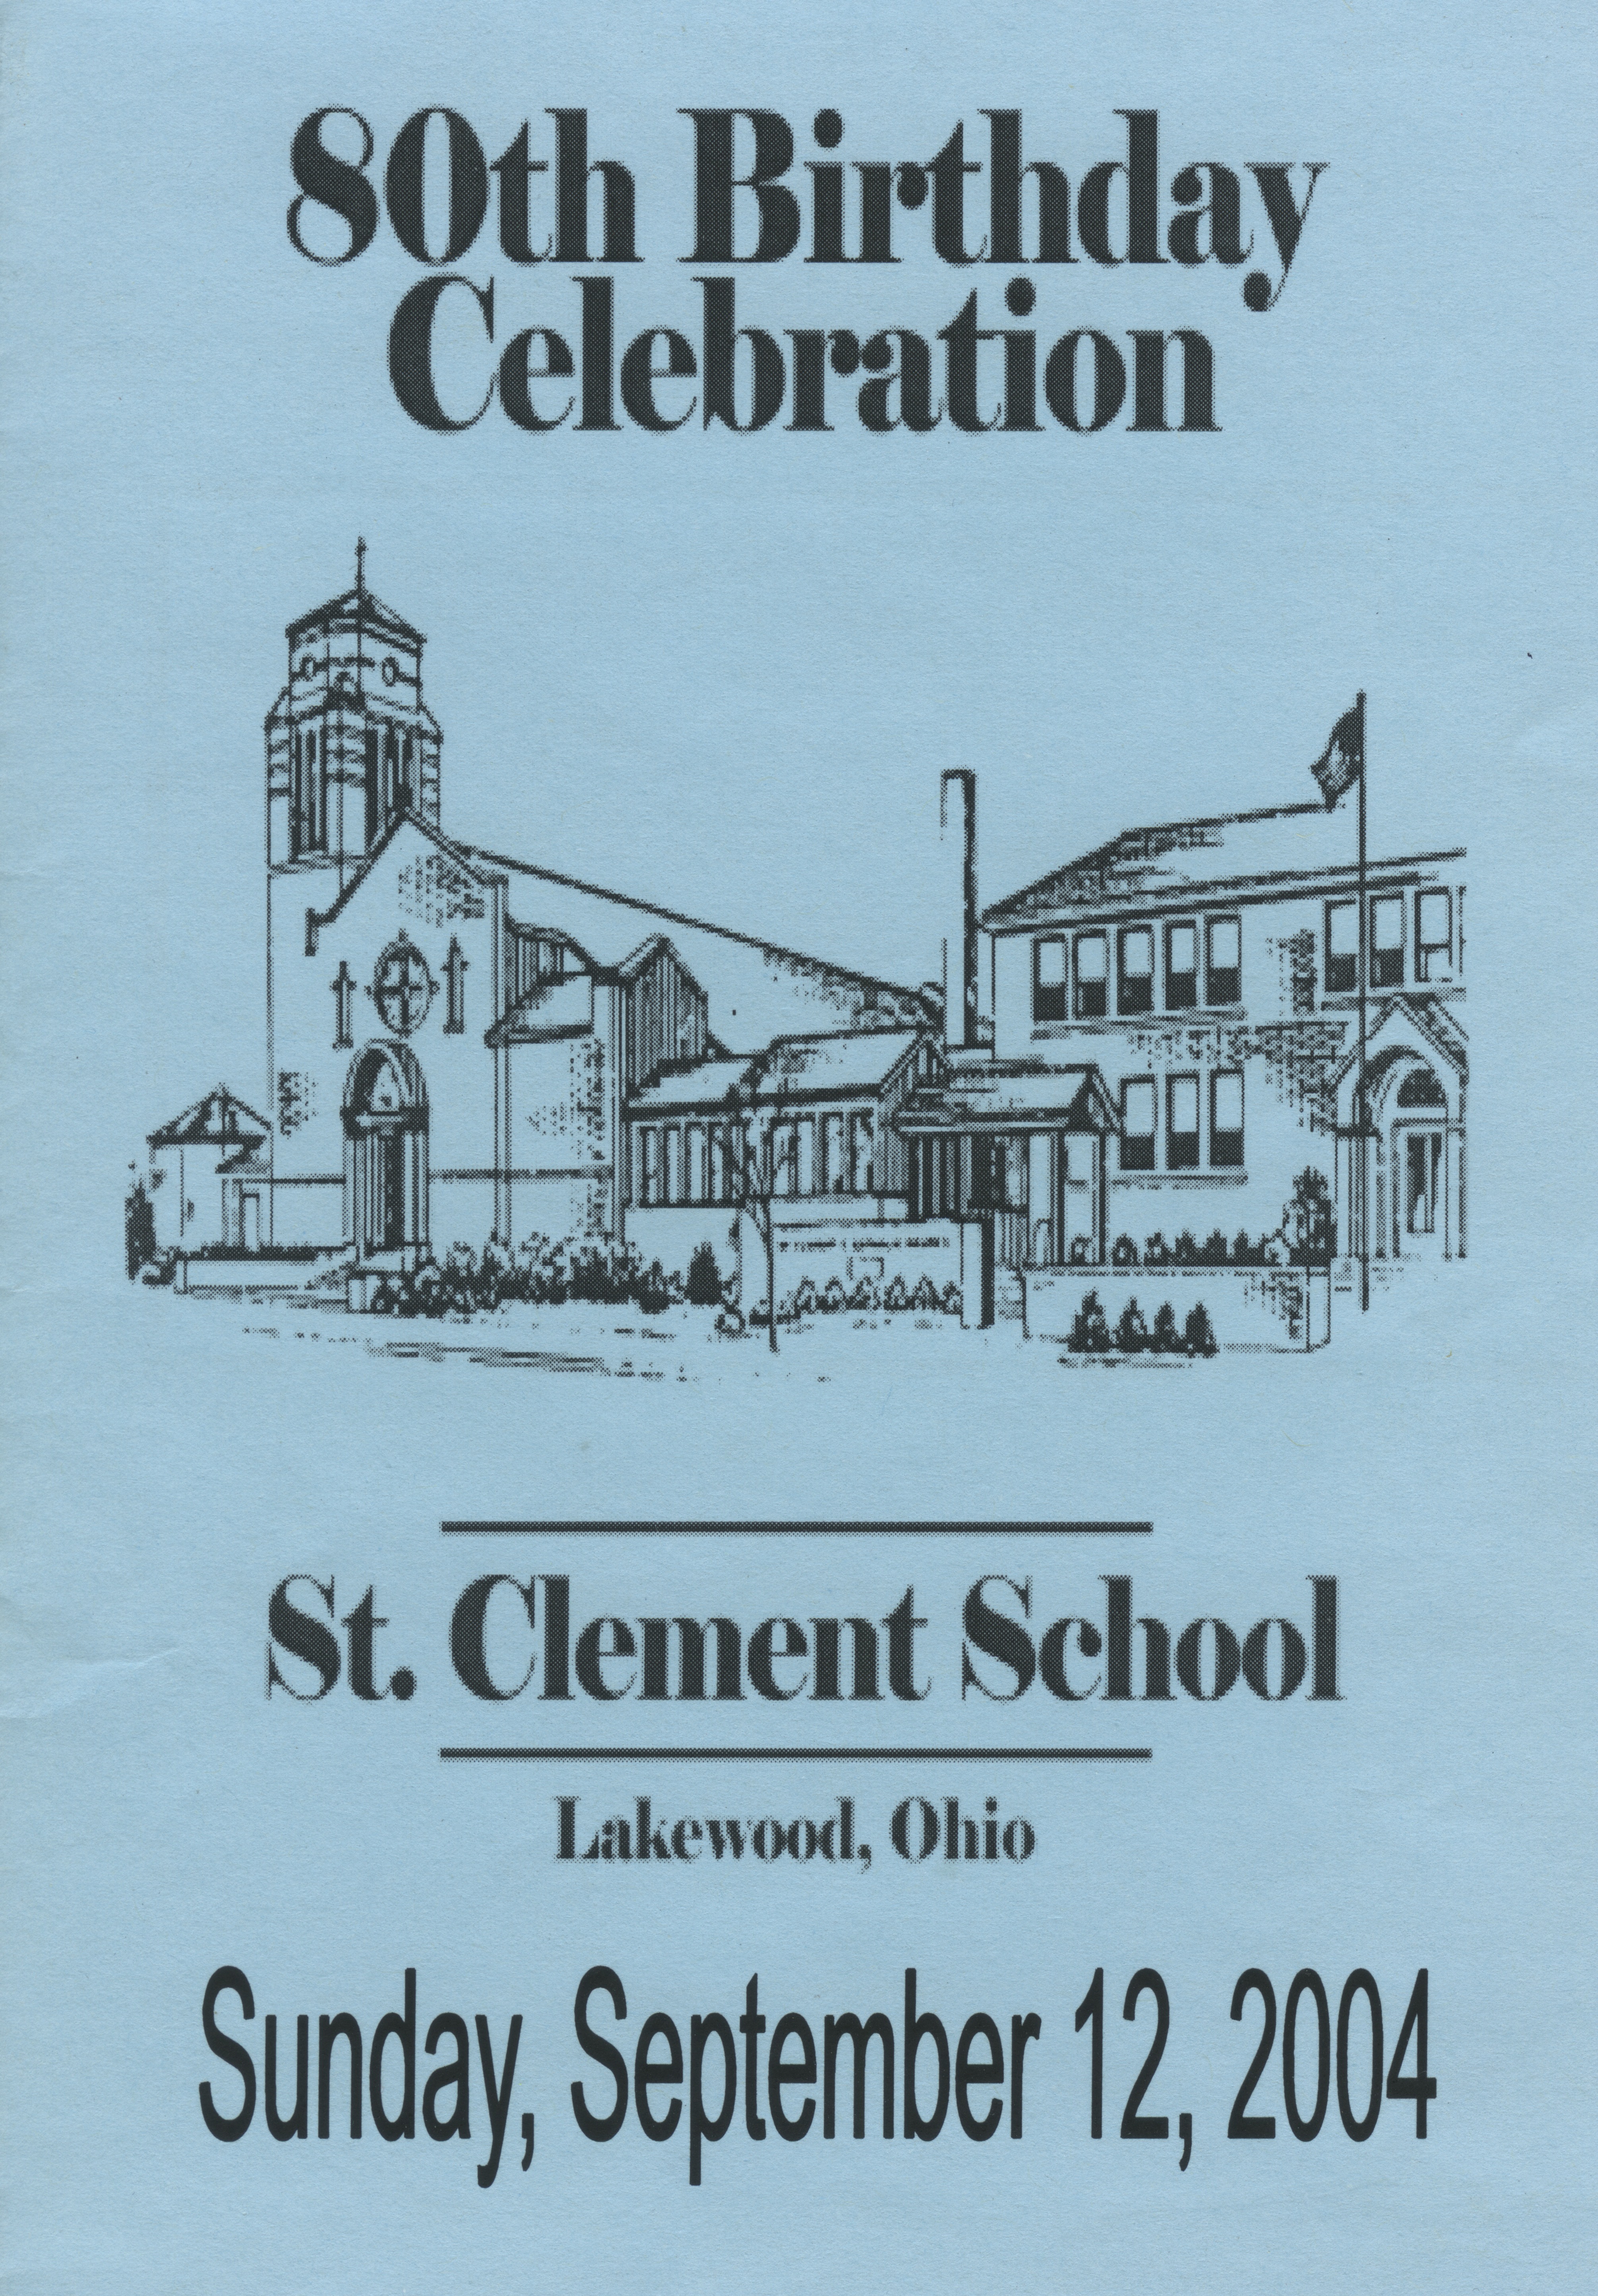 St. Clement School 80th Birthday Celebration